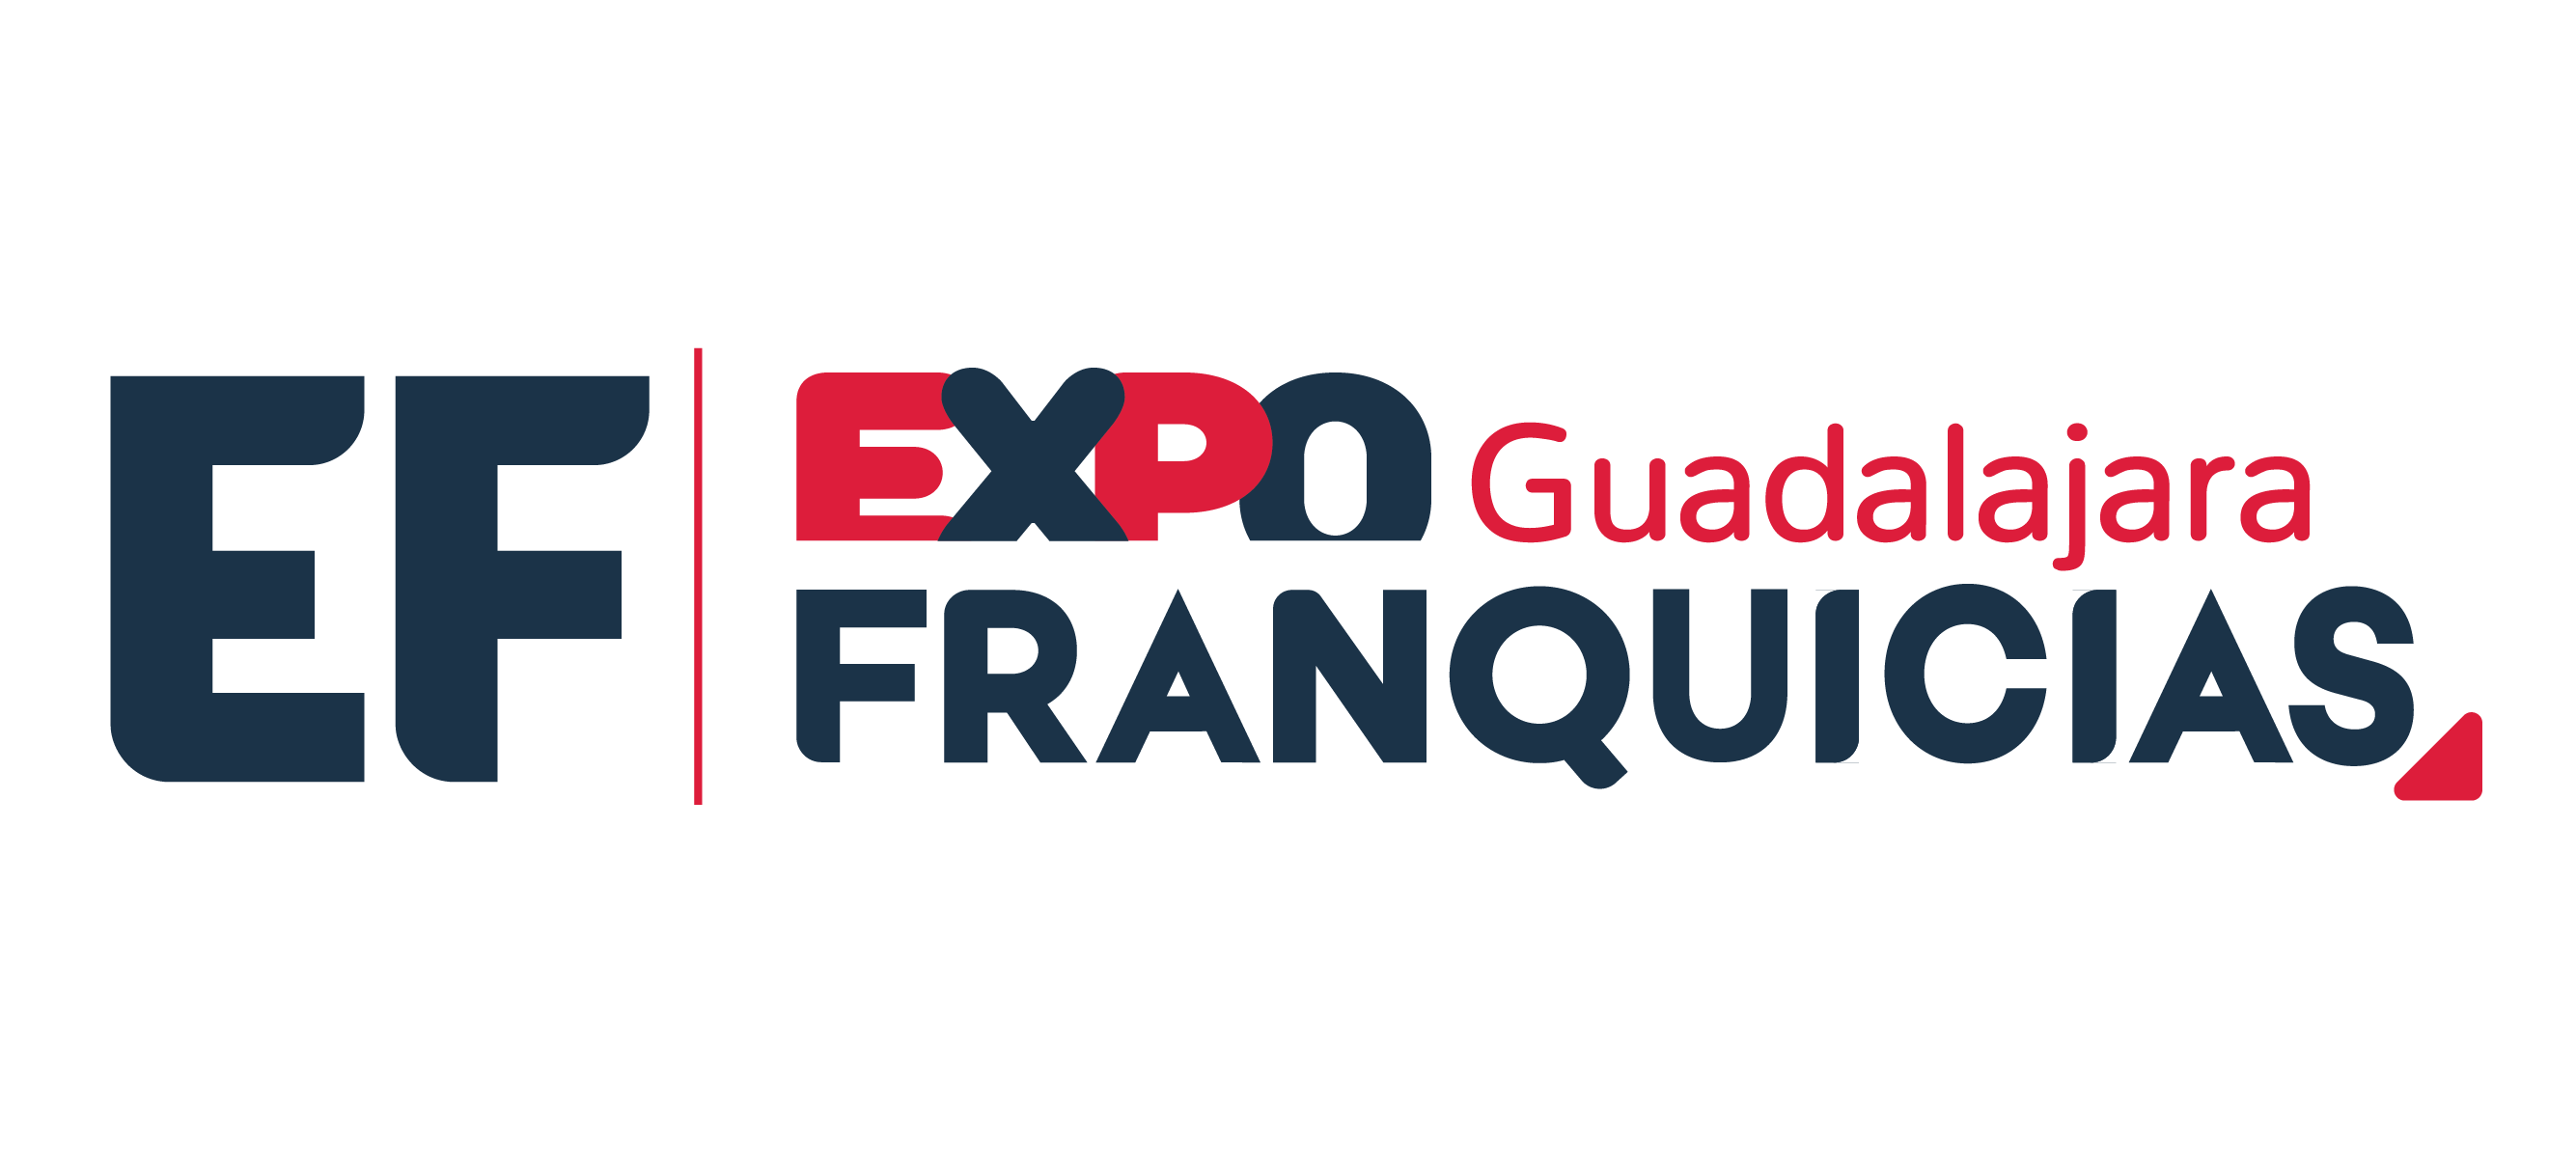 EXPO FRANQUICIAS GUADALAJARA